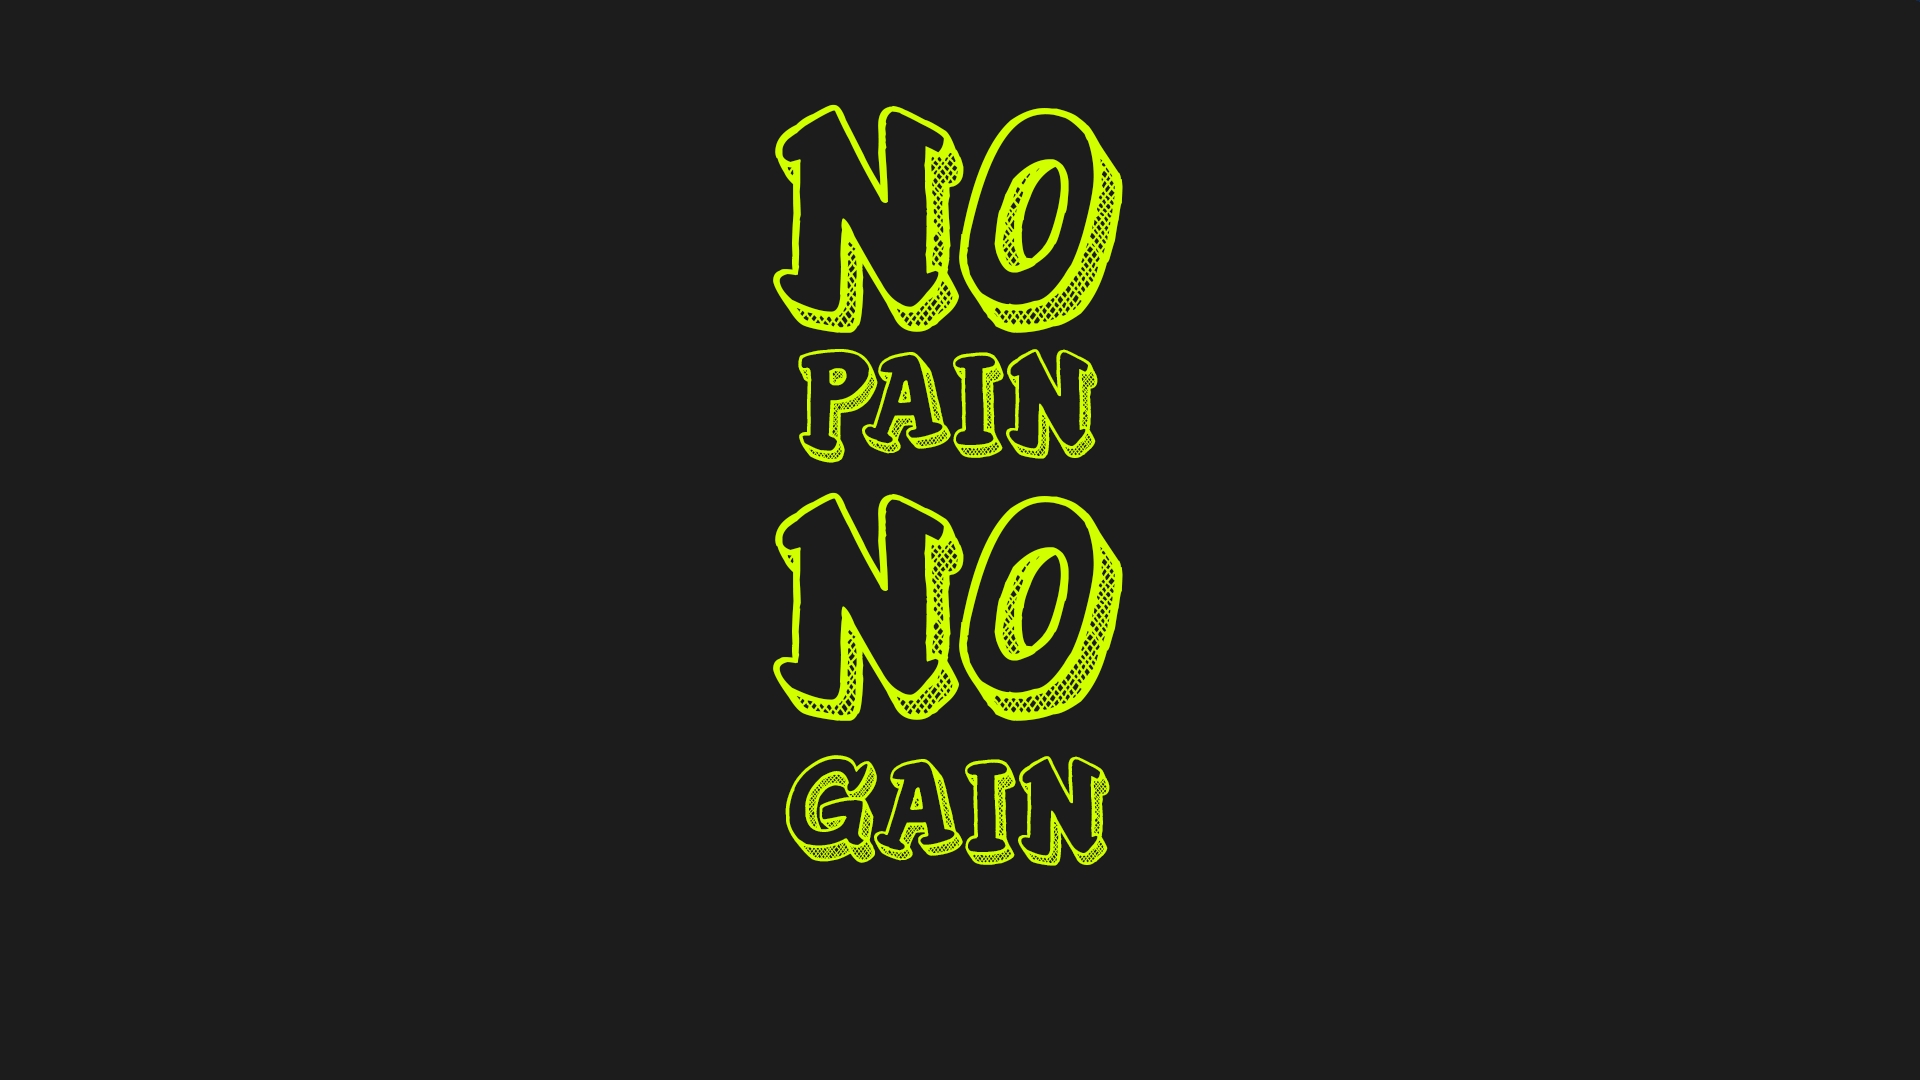 no pain no gain wallpapers - wallpaper cave